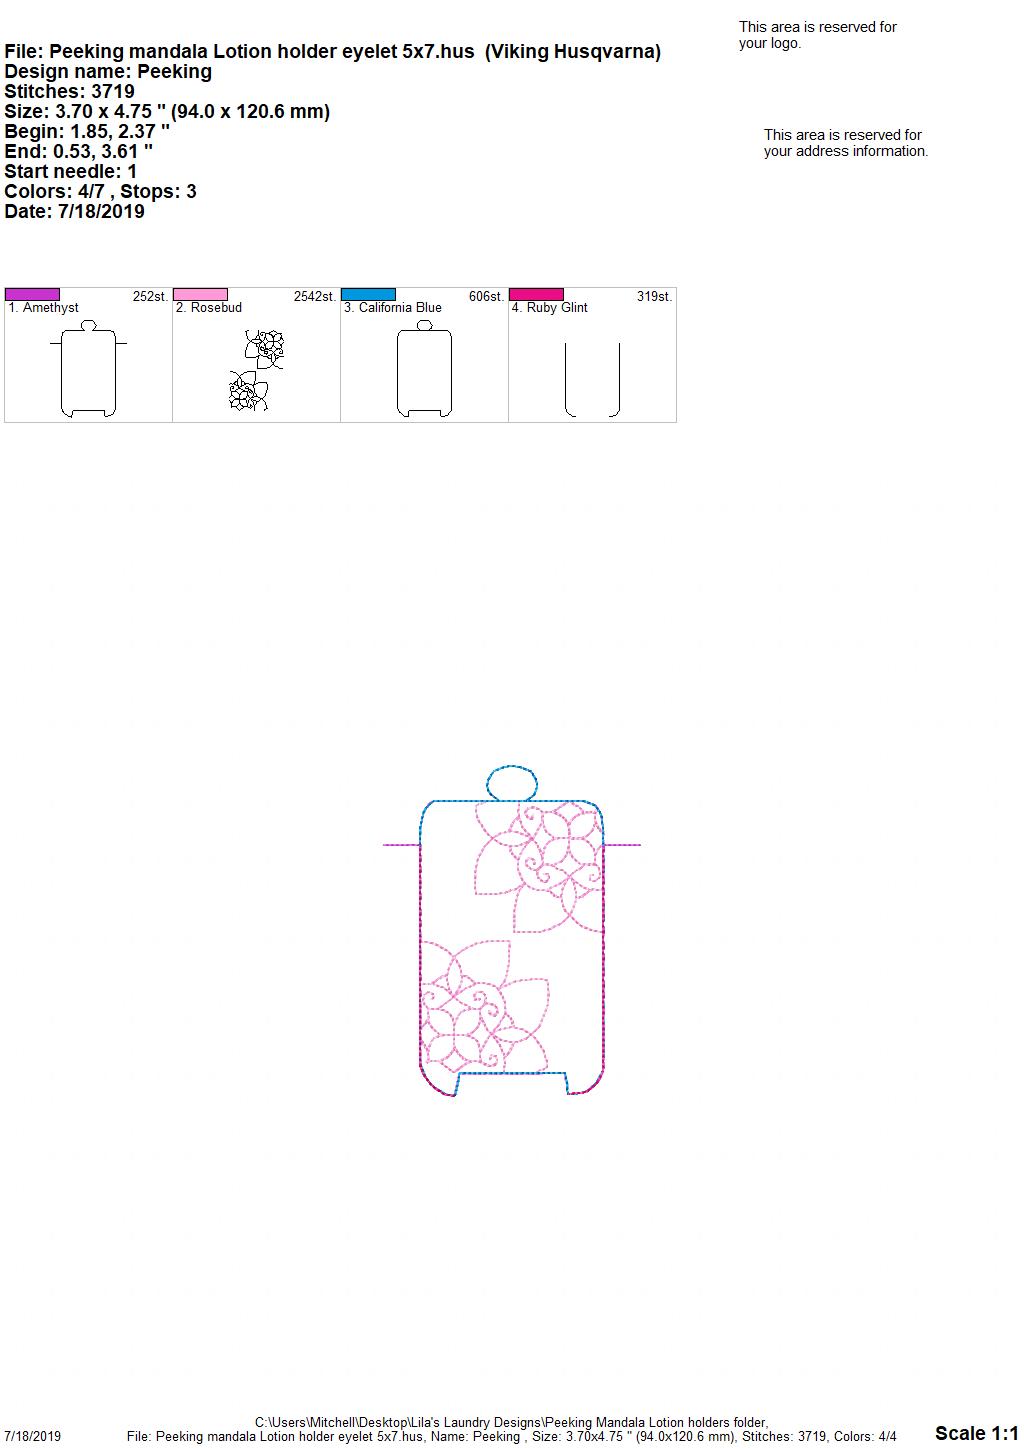 Peeking Mandala Lotion Holder 5x7 - DIGITAL Embroidery DESIGN